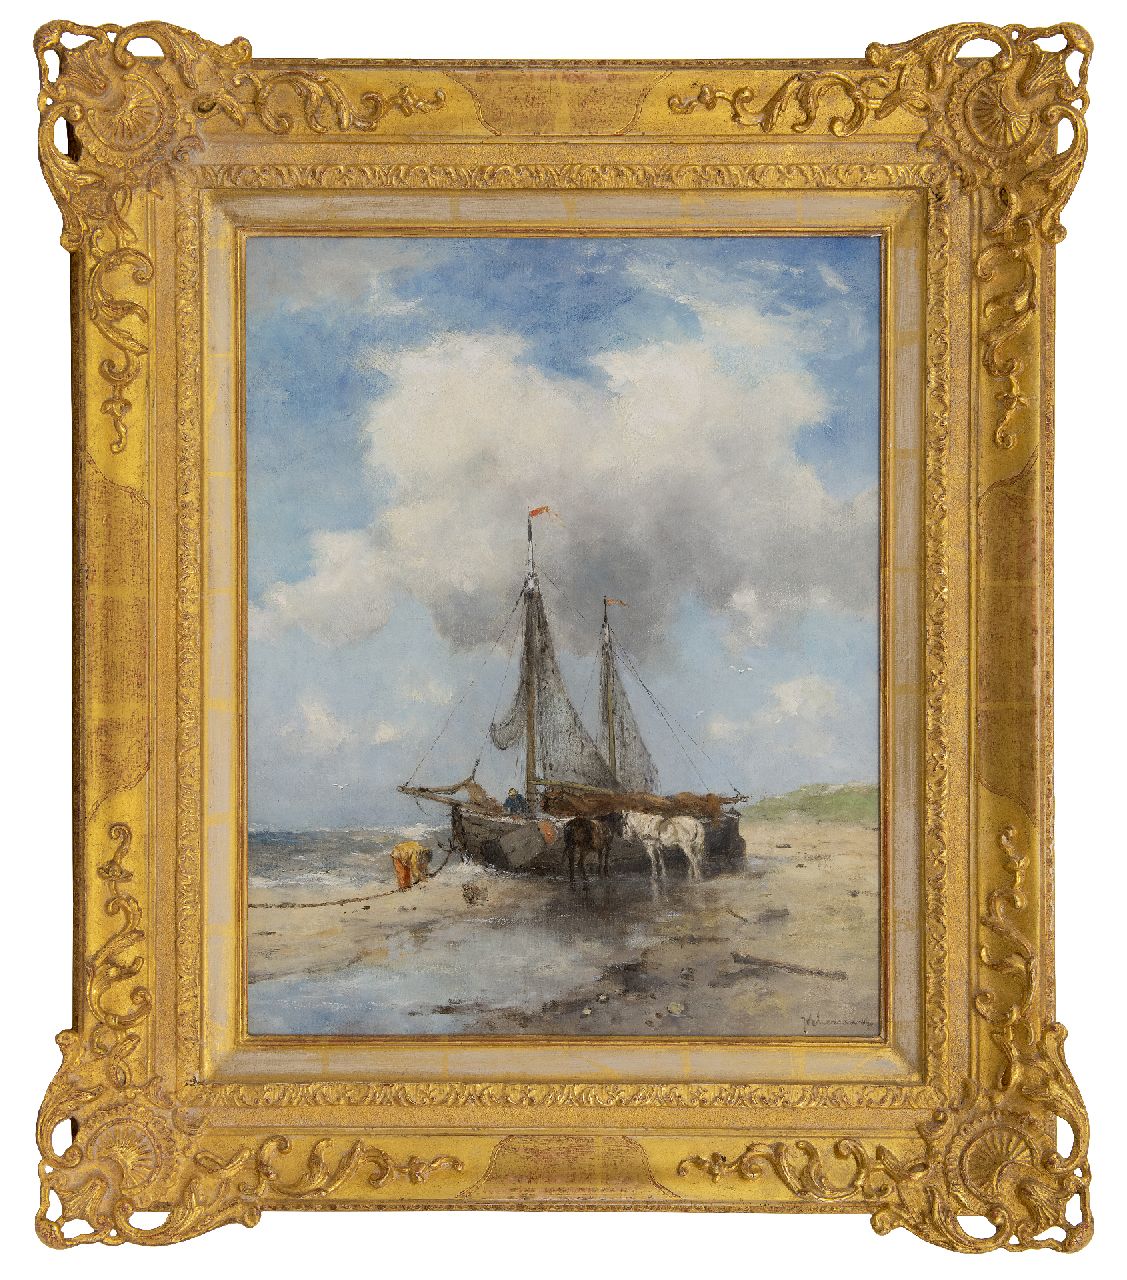 Scherrewitz J.F.C.  | Johan Frederik Cornelis Scherrewitz | Paintings offered for sale | Fishing boats on the beach, oil on canvas 50.5 x 40.5 cm, signed l.r.